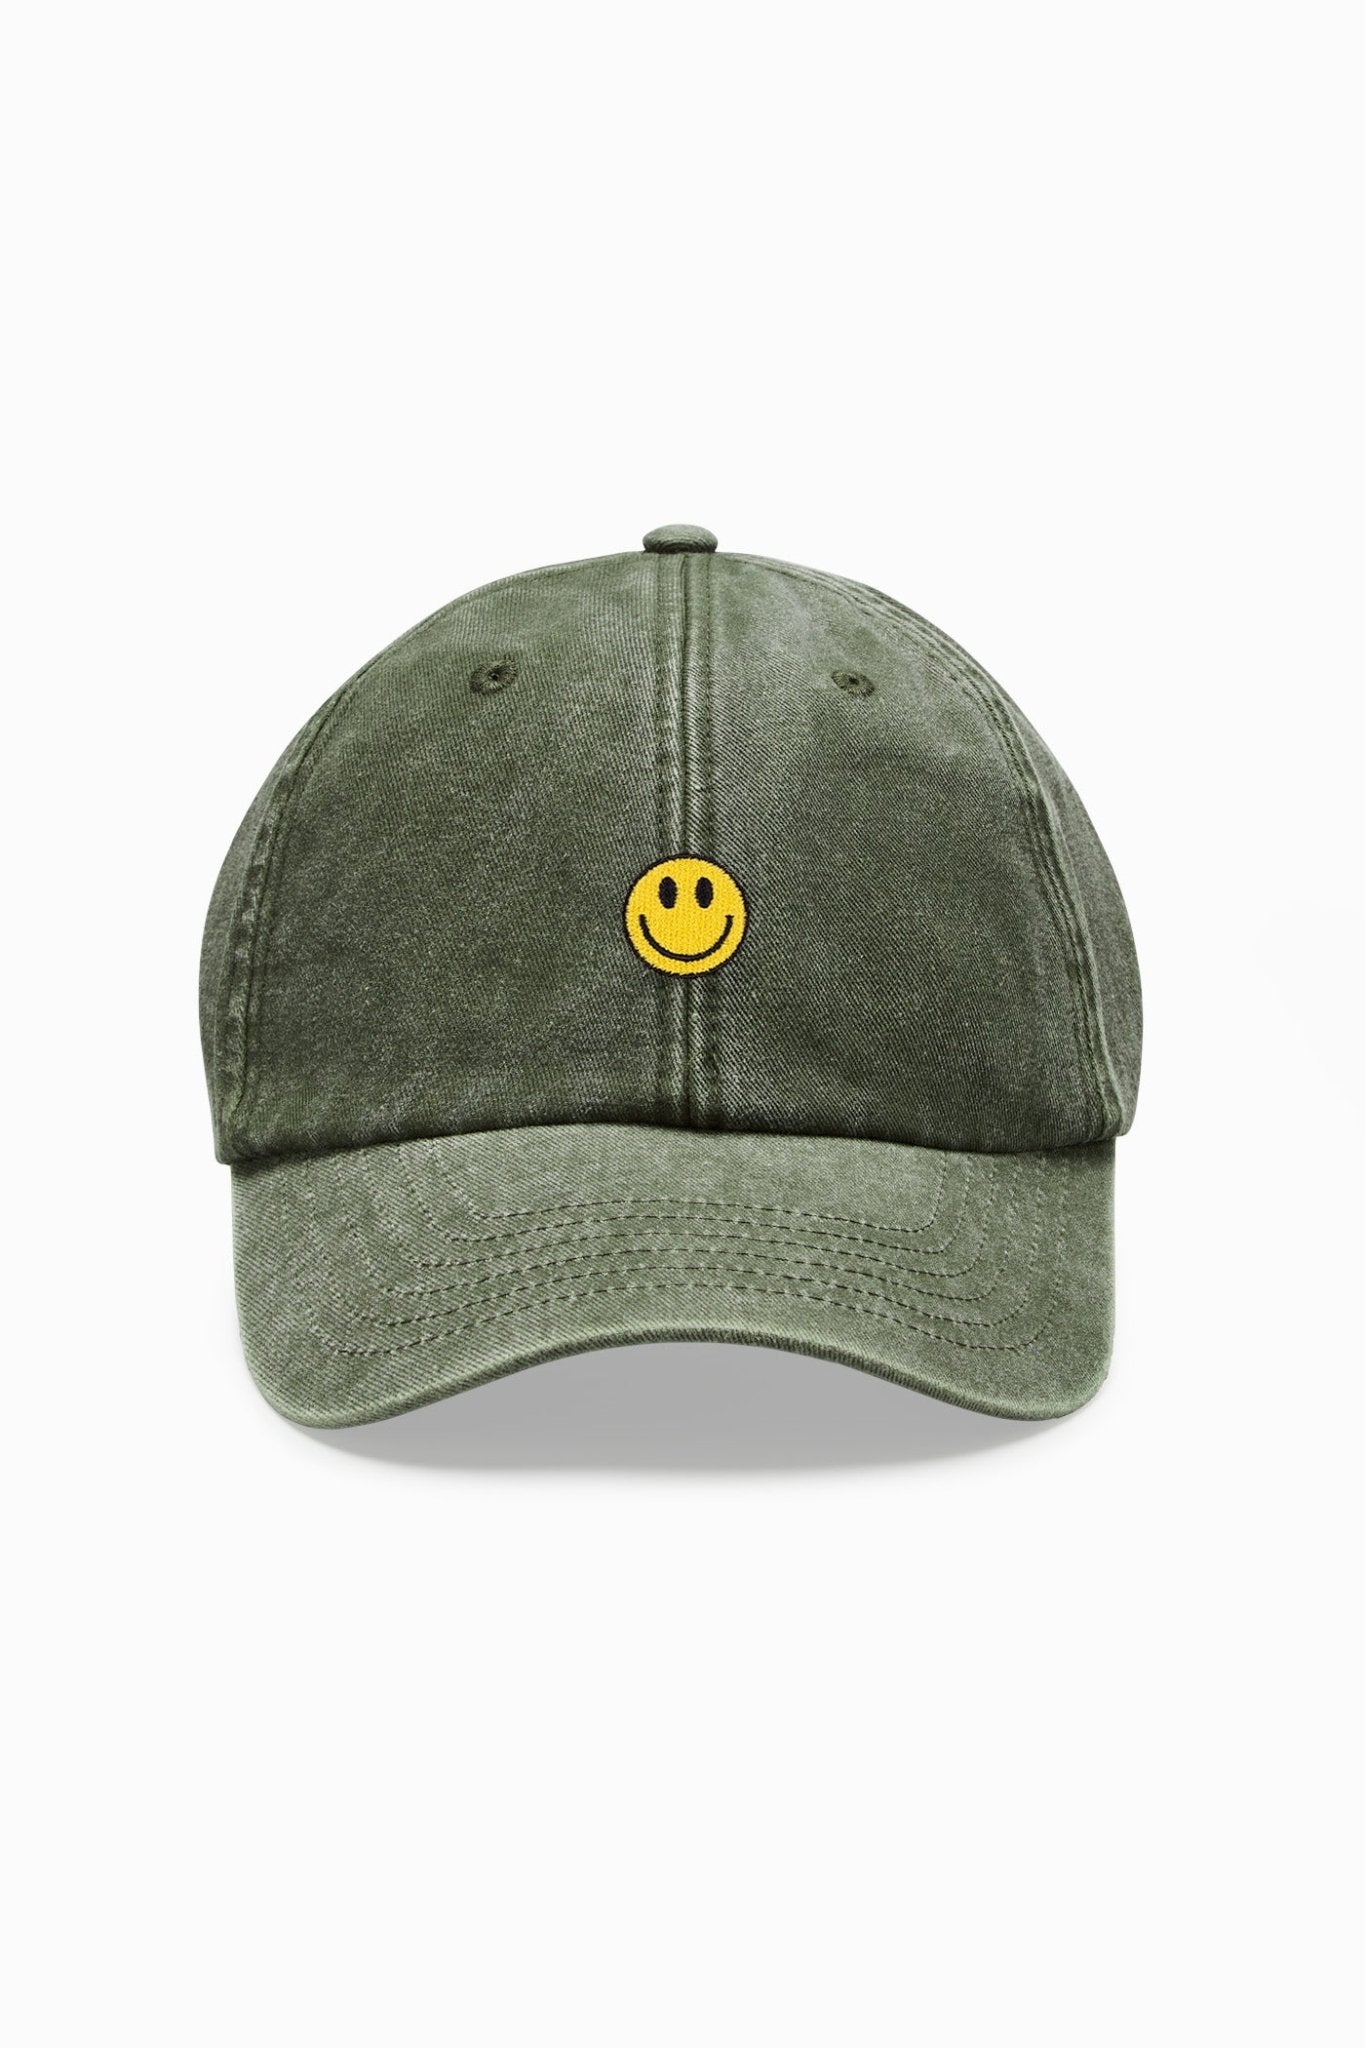 Smiley Face Vintage Cap